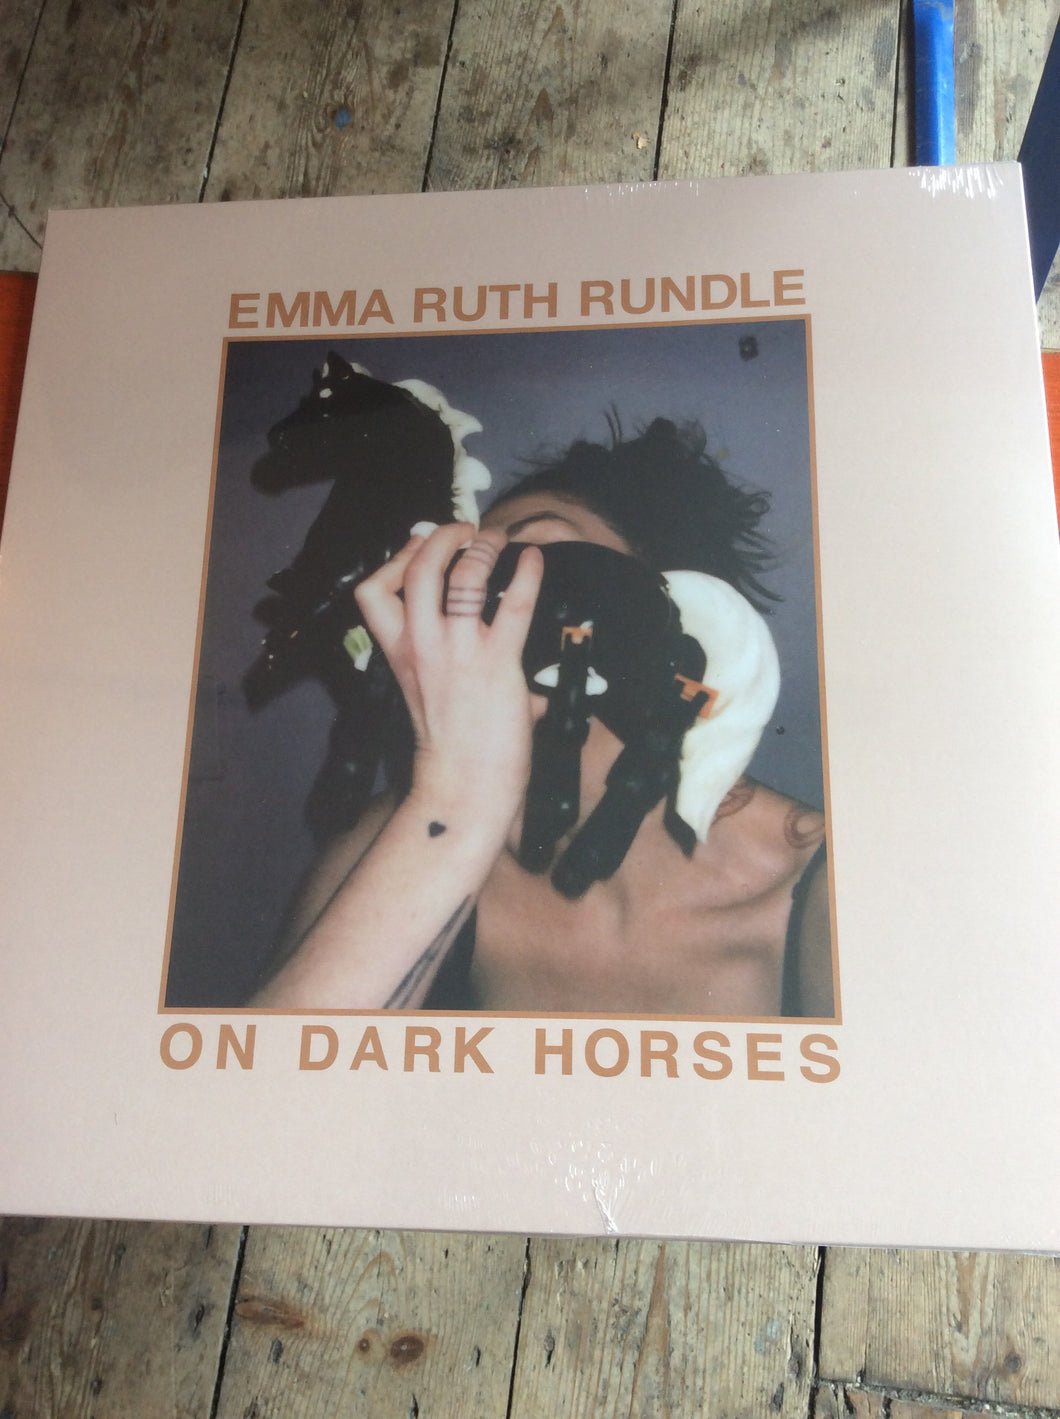 Emma Ruth Rundle - On Dark Horses